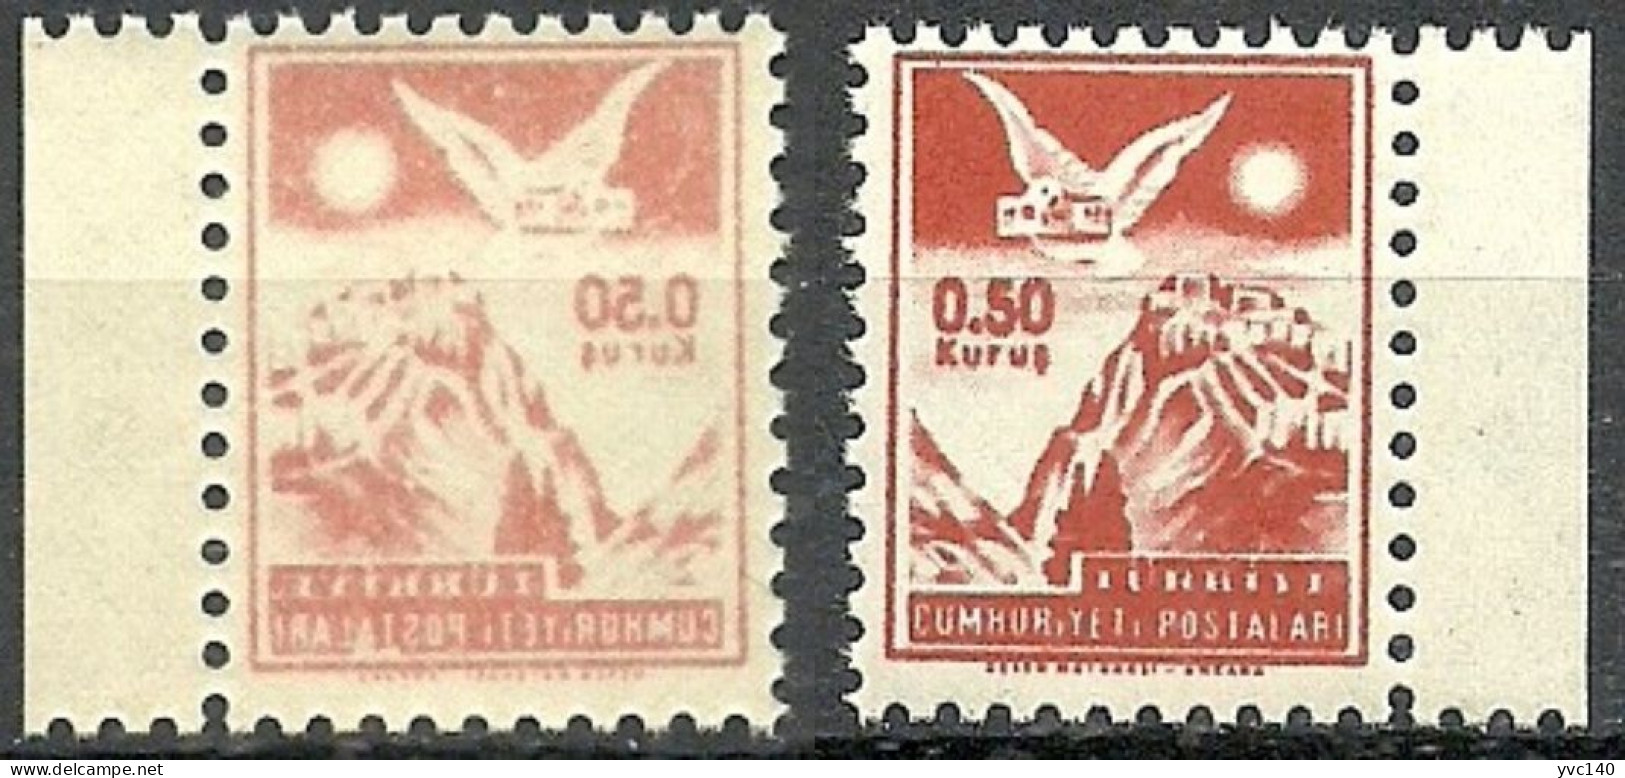 Turkey; 1954 "0.50 Kurus" Postage Stamp "Abklatsch Print" - Neufs